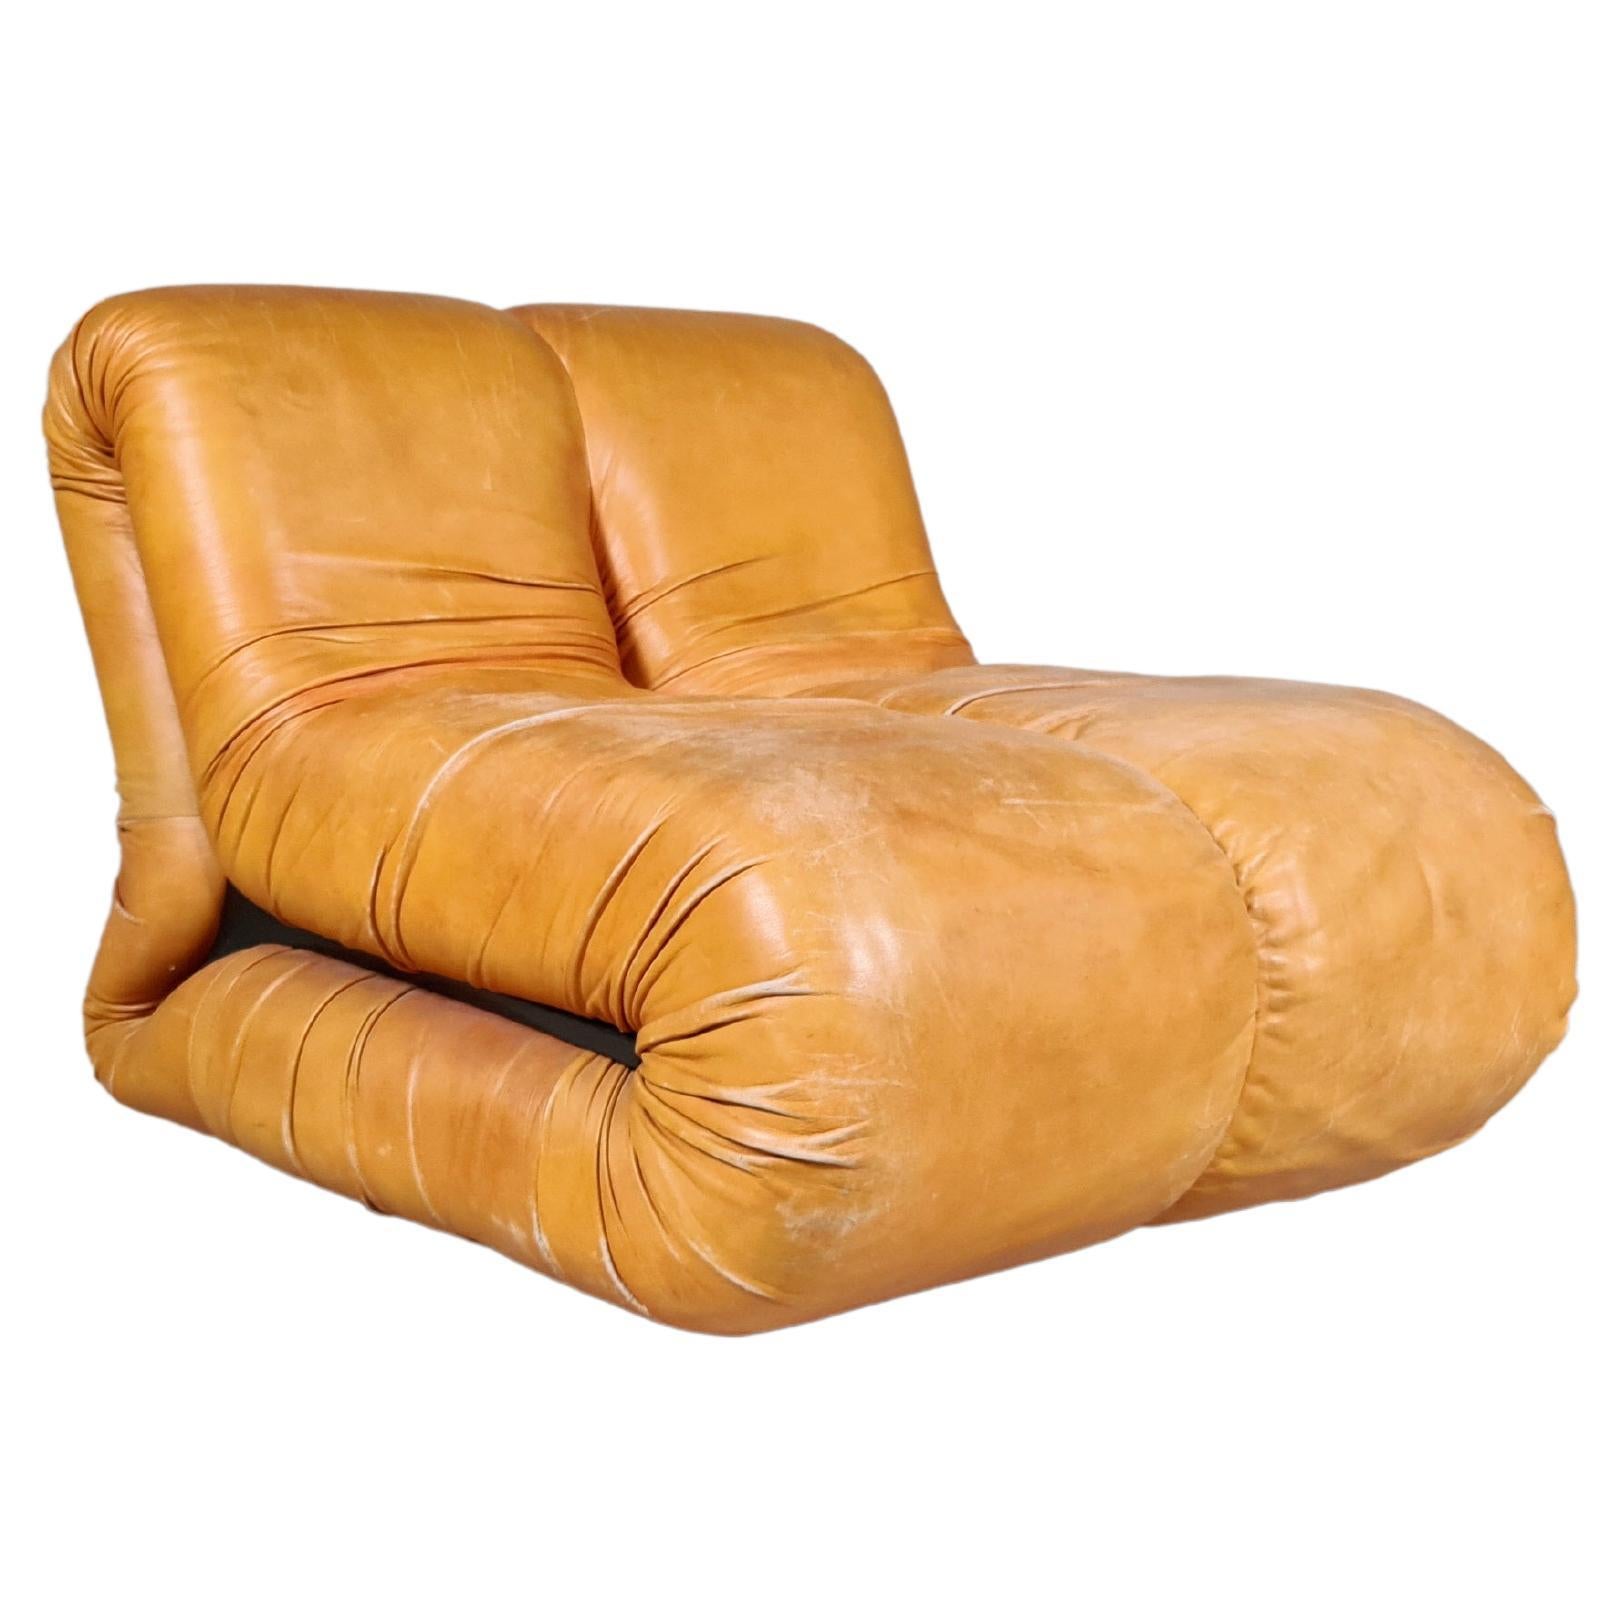 Claudio Vagnoni for 1P, 'Pagru' Lounge Chair in Original cognac Leather For Sale